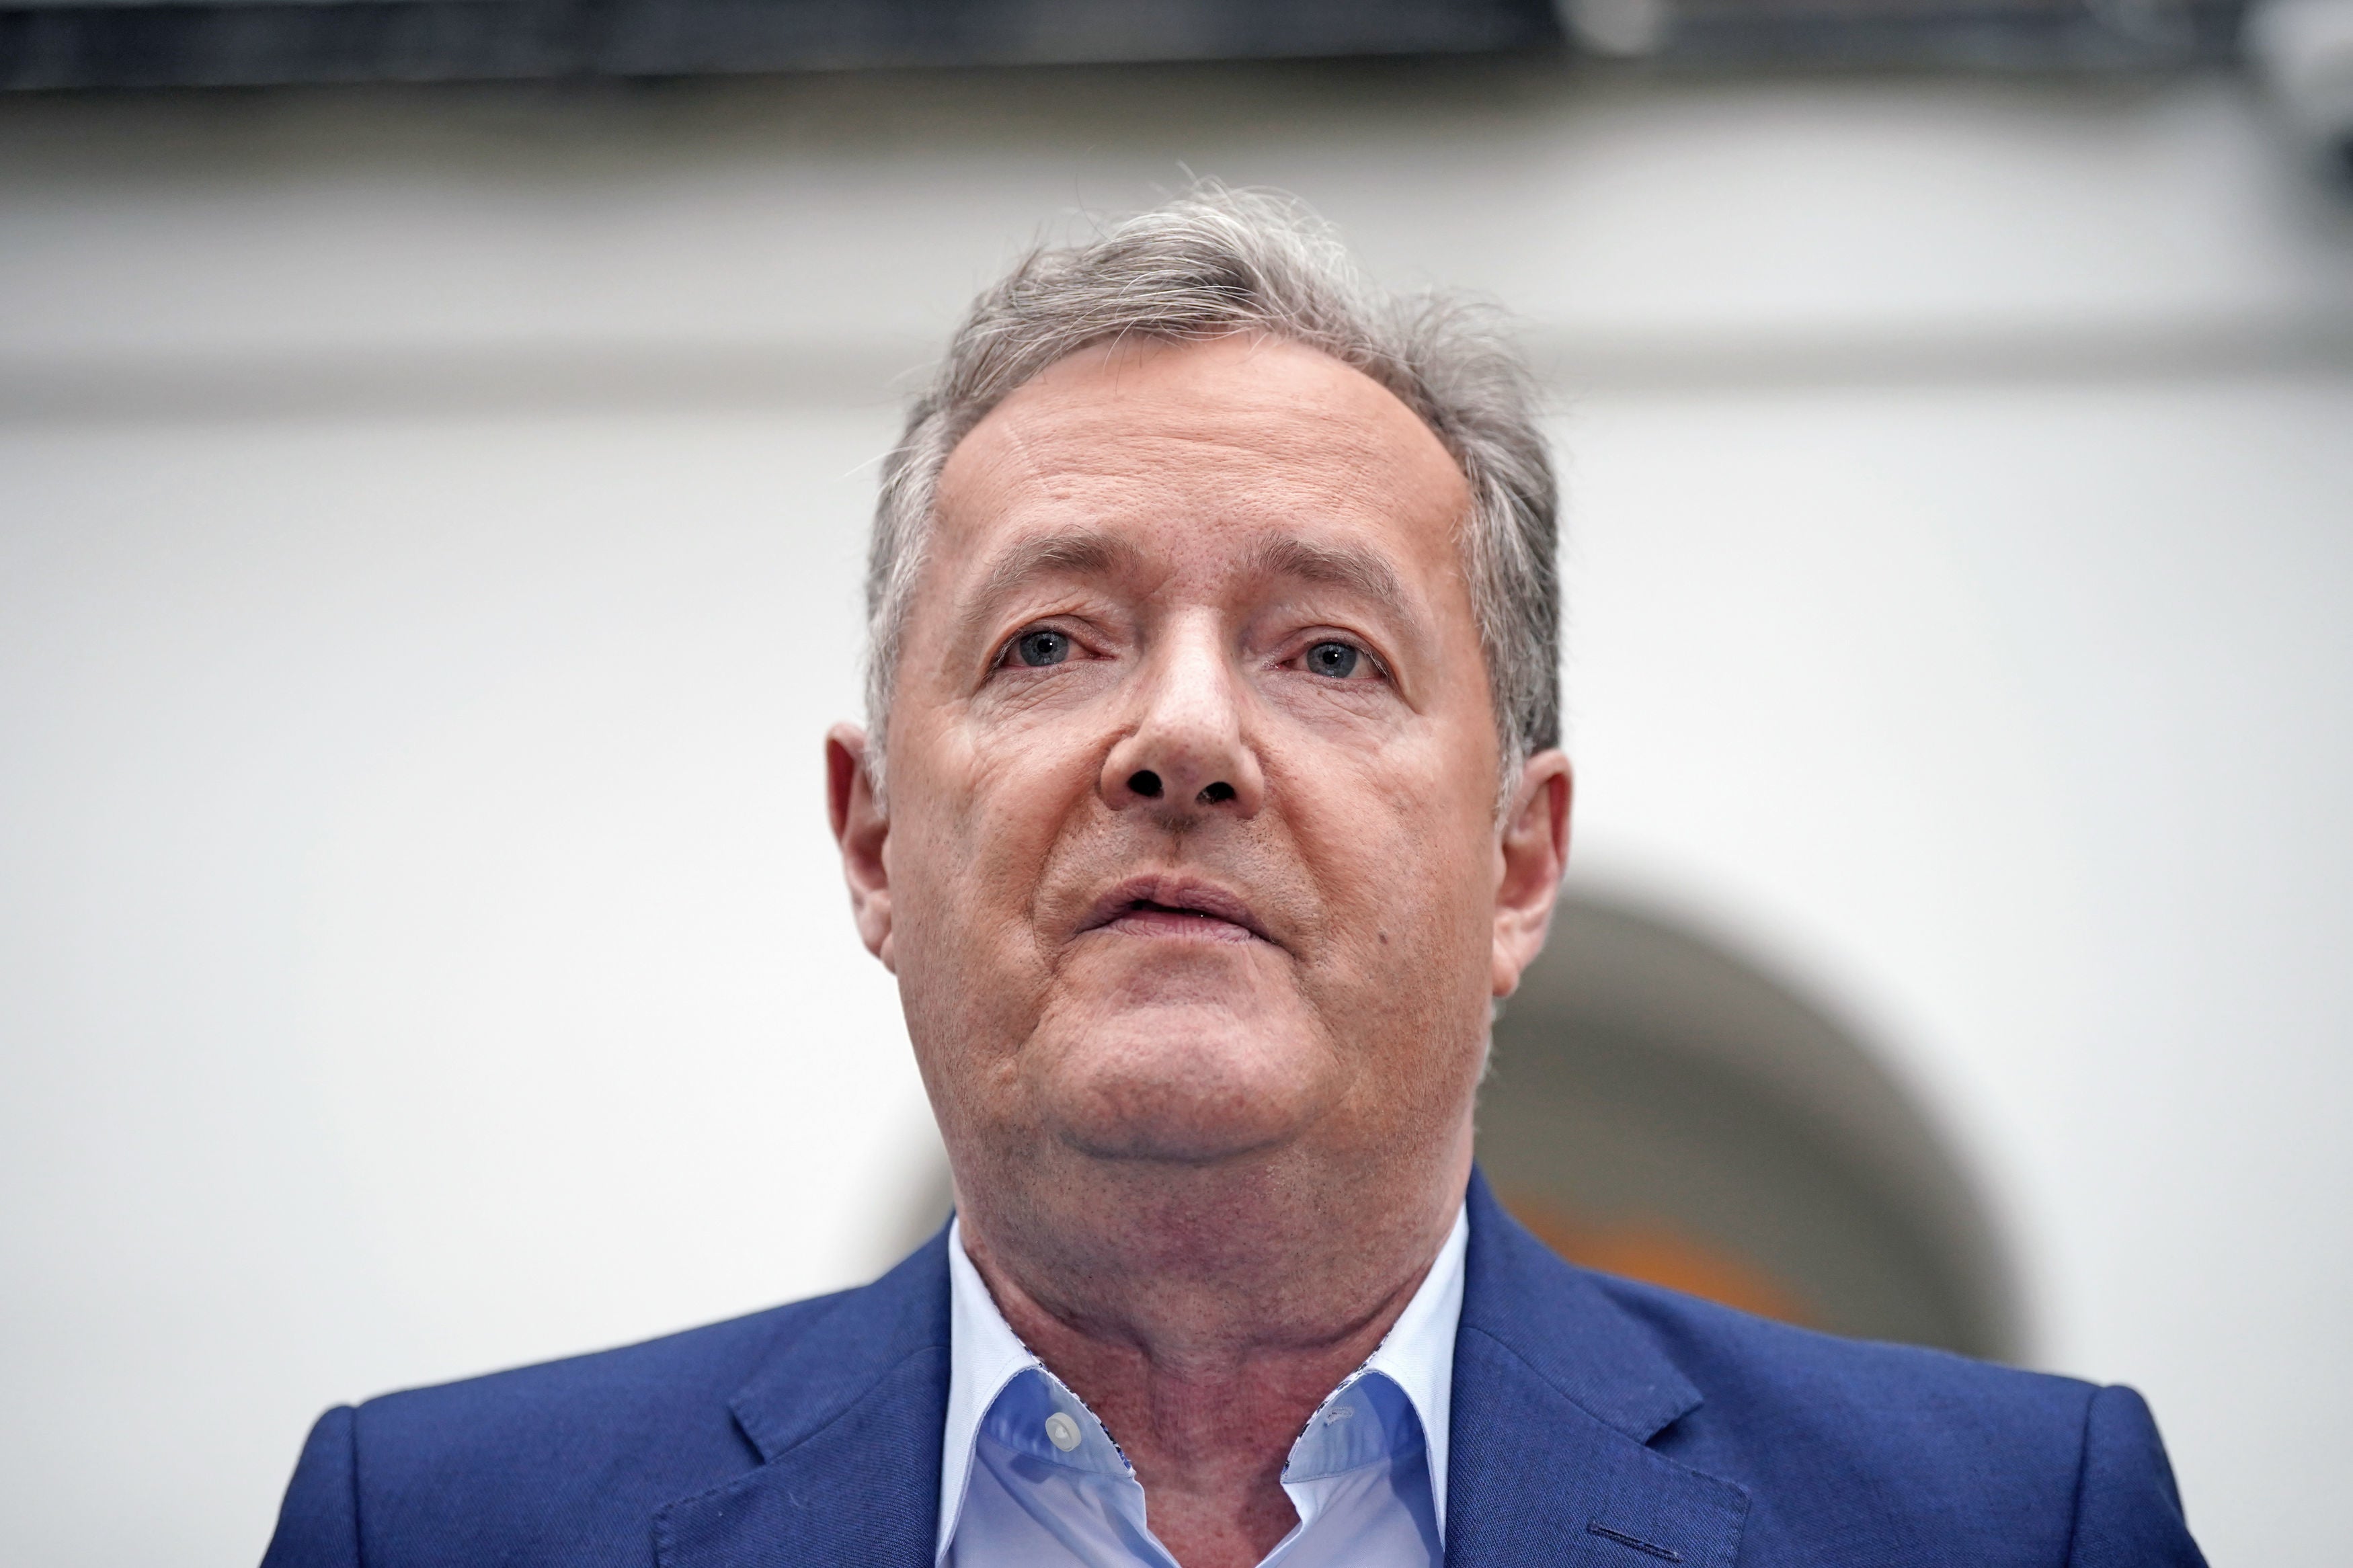 Piers Morgan said he had ‘zero knowledge’ of phone hacking